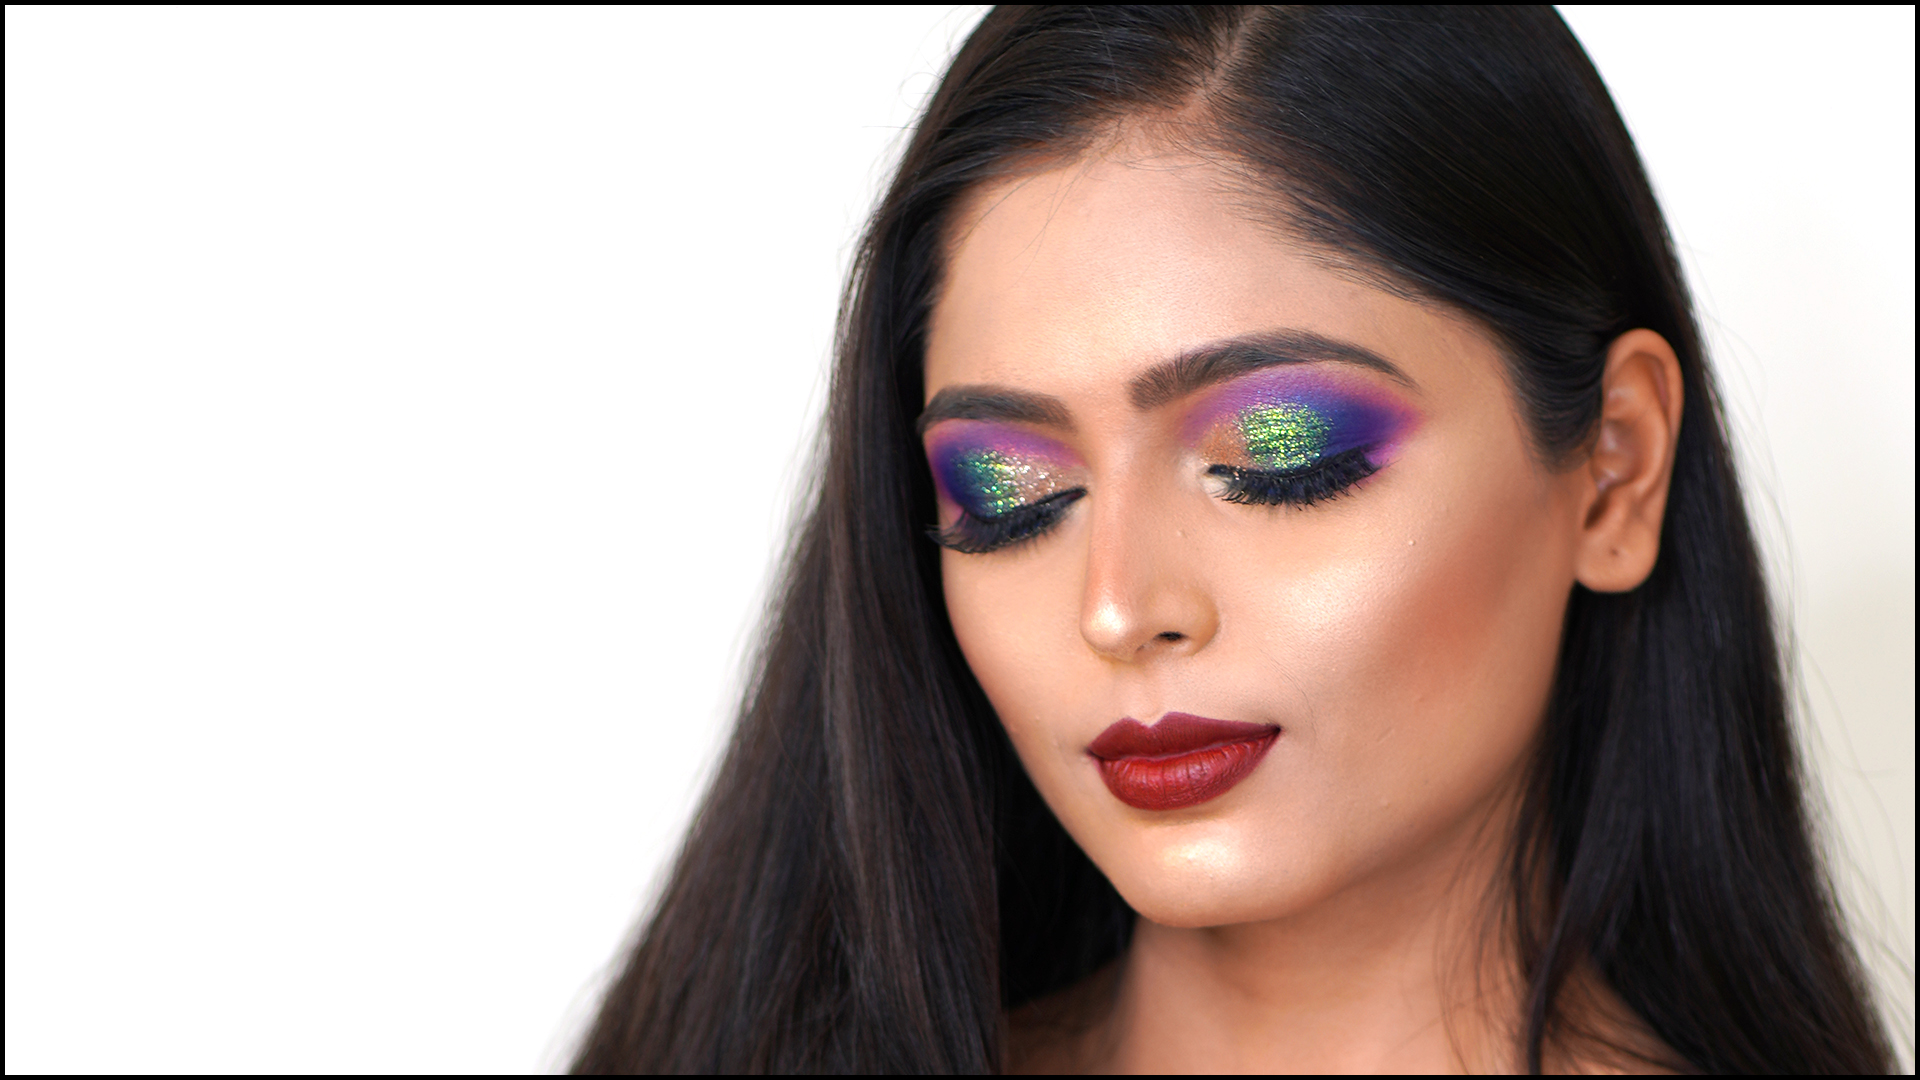 Extra Glow Makeup + Smokey Colored Makeup For Instagram